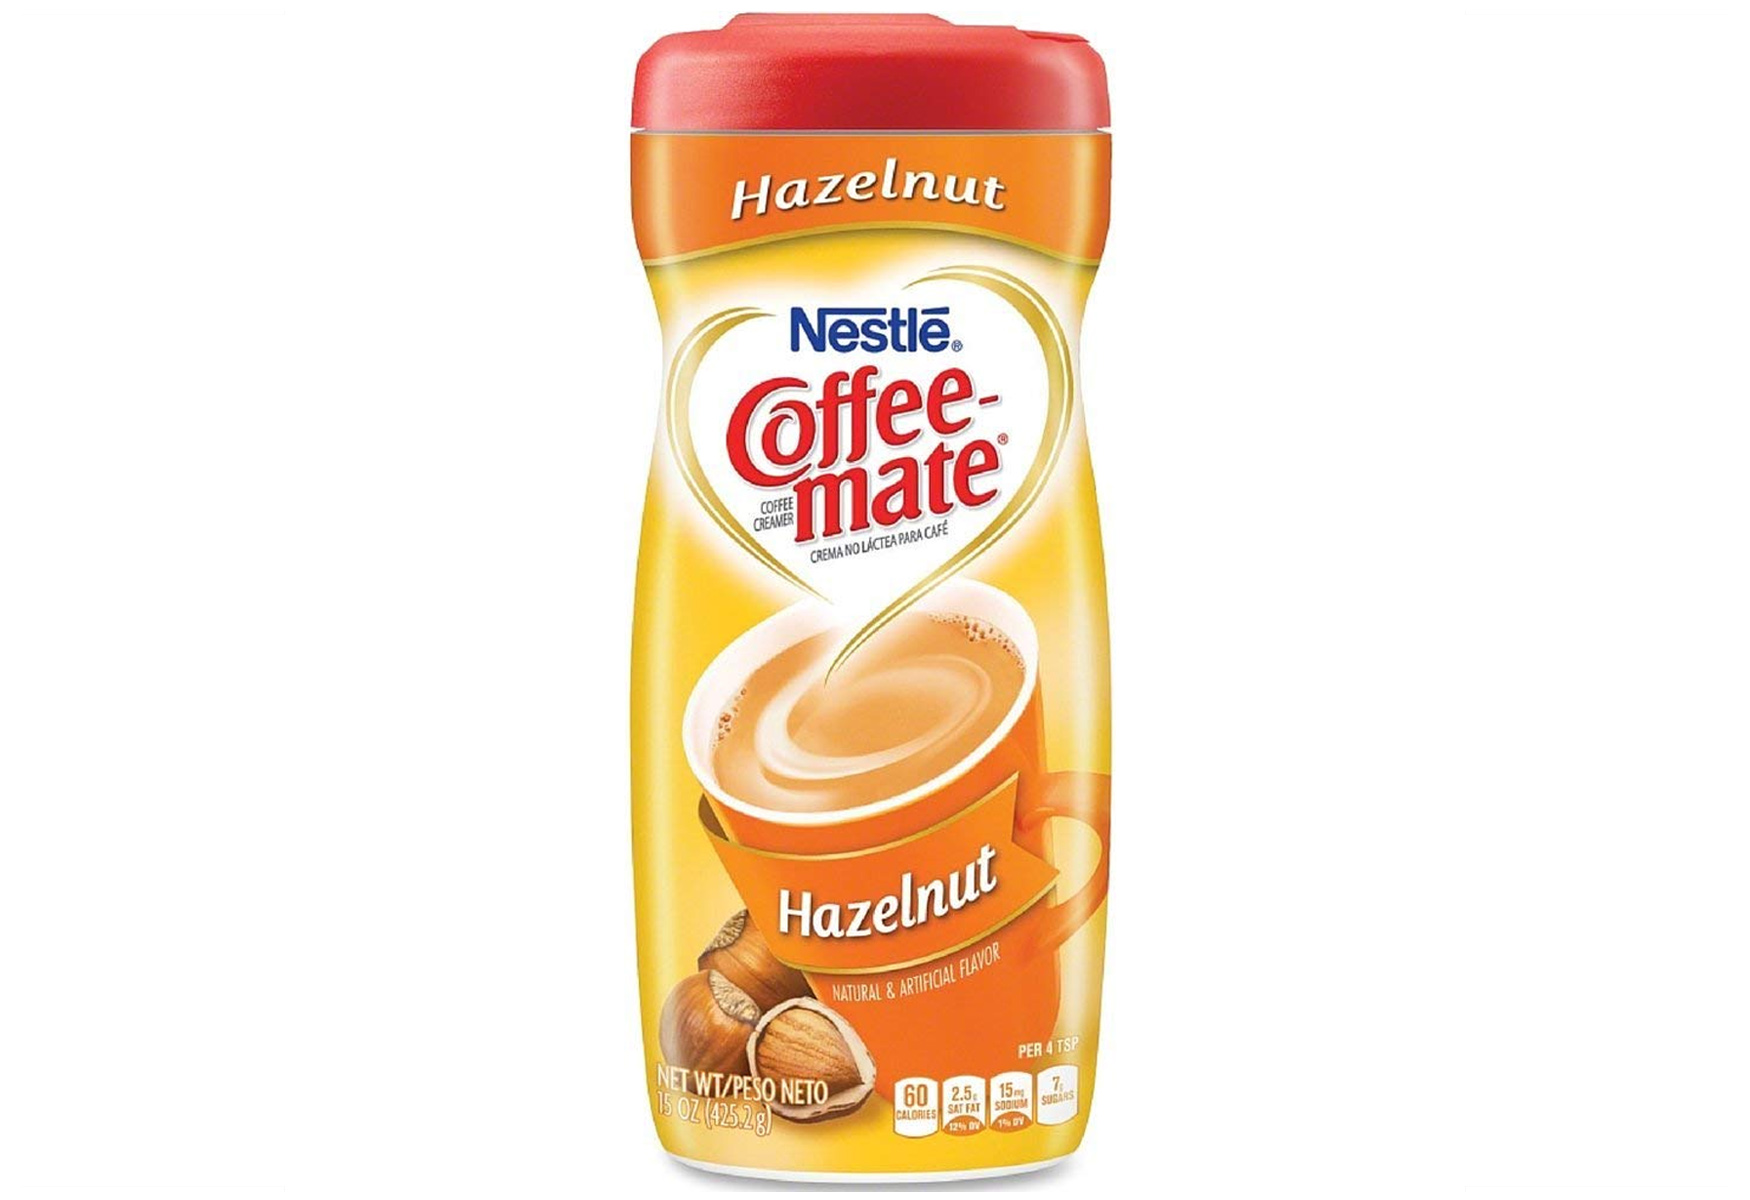 11 Coffee Mate Hazelnut Creamer Nutrition Facts - Facts.net